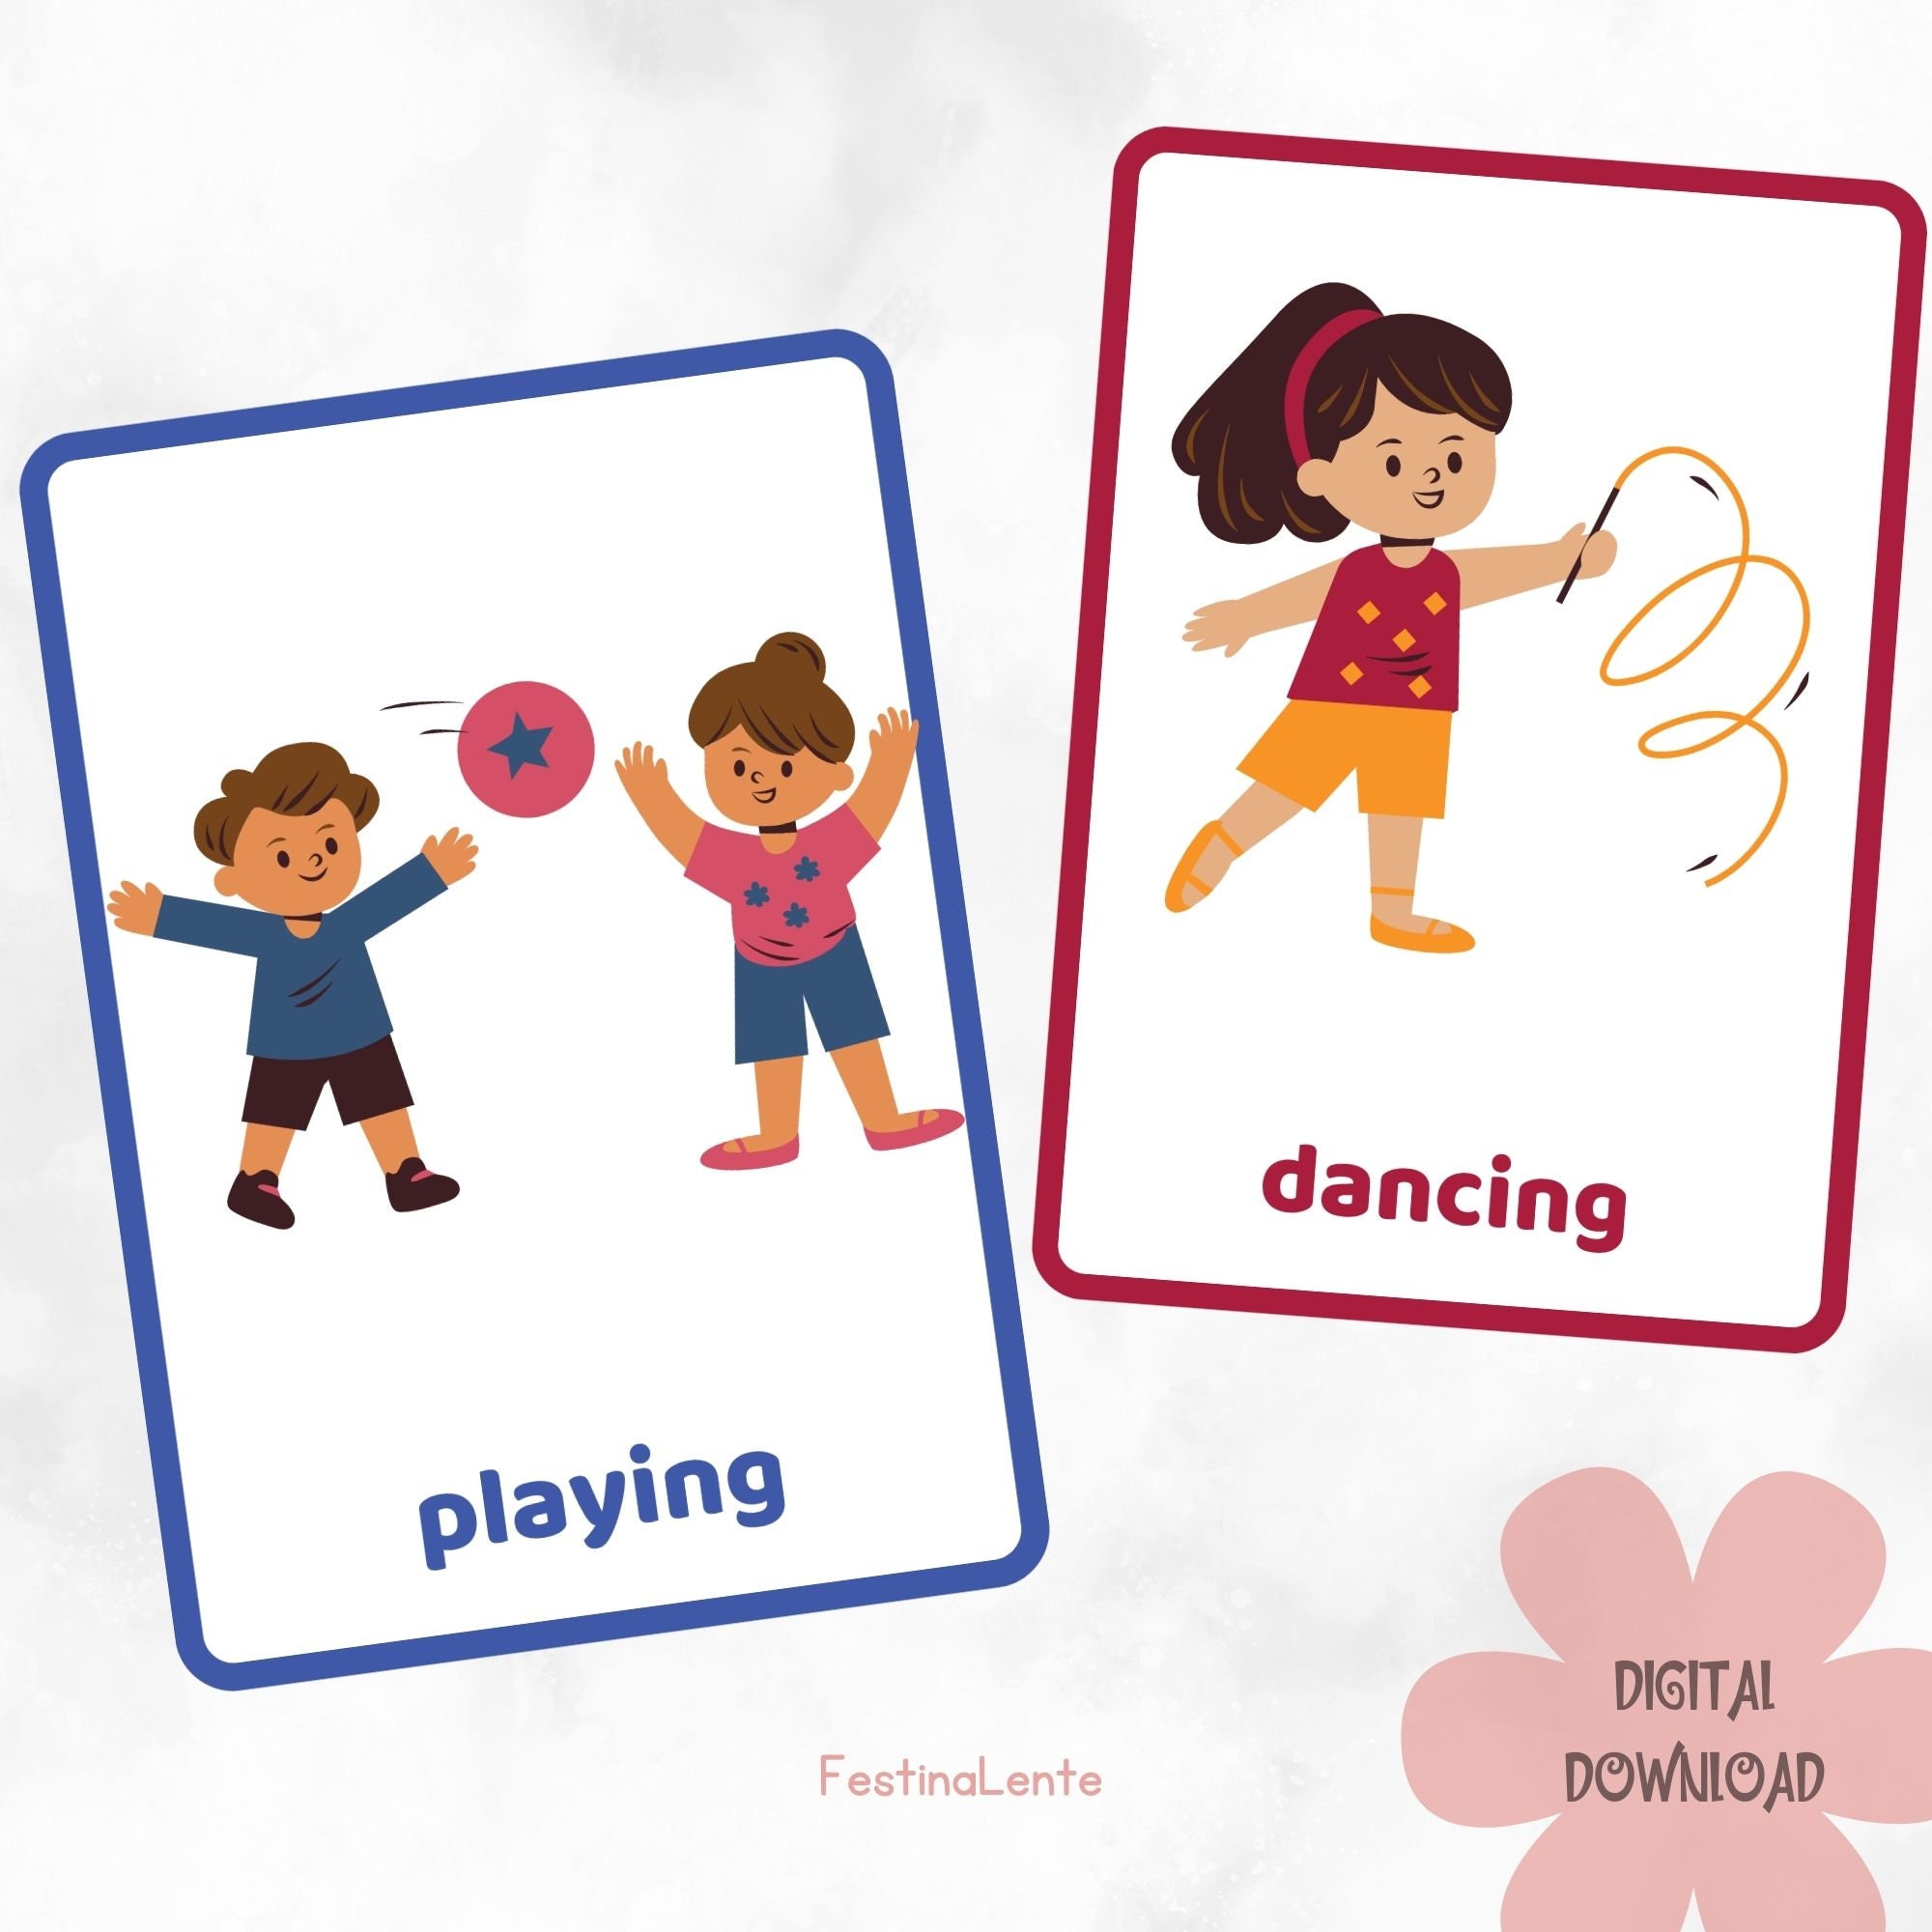 Dance vocabulary - week 2 Flashcards